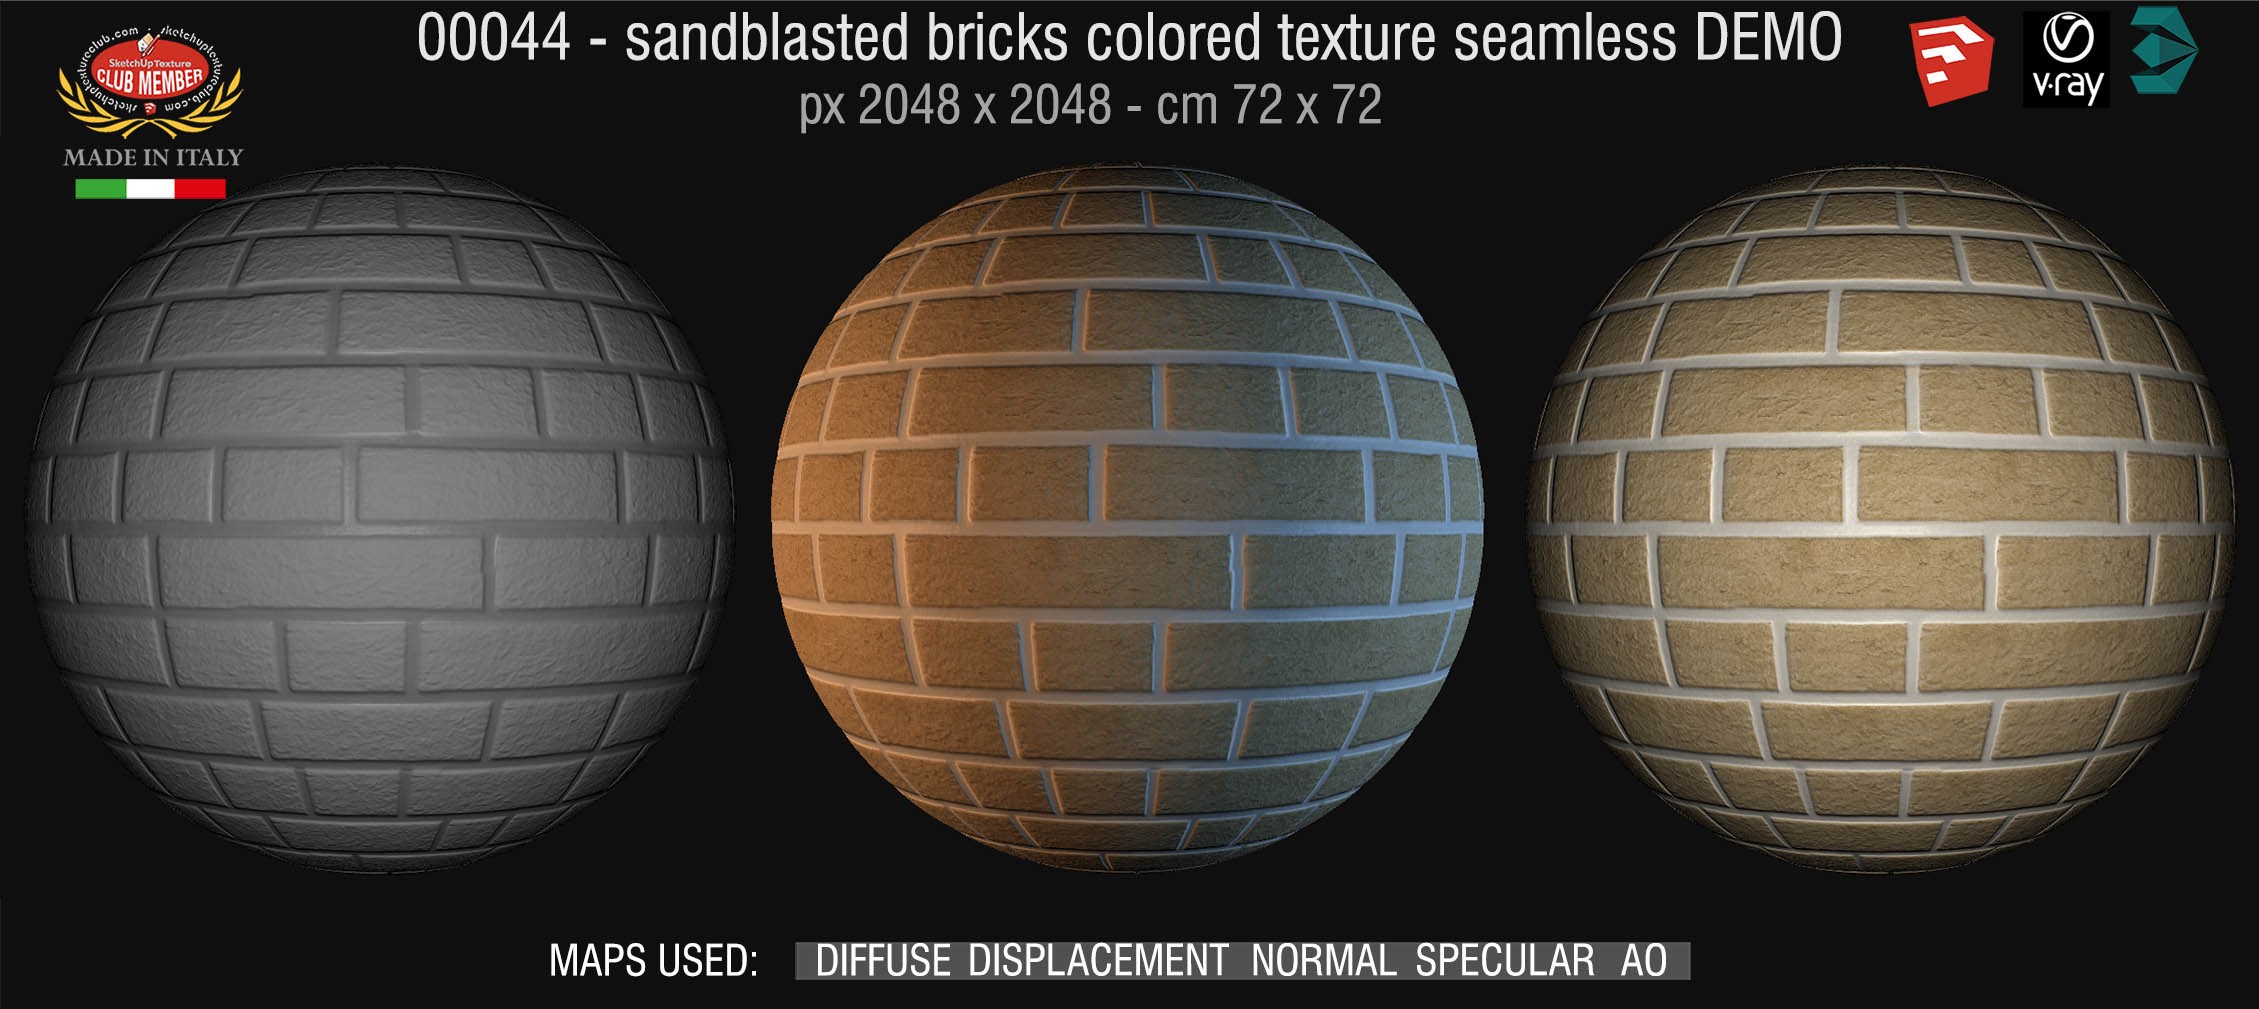 00044 Sandblasted bricks colored texture seamless + maps DEMO